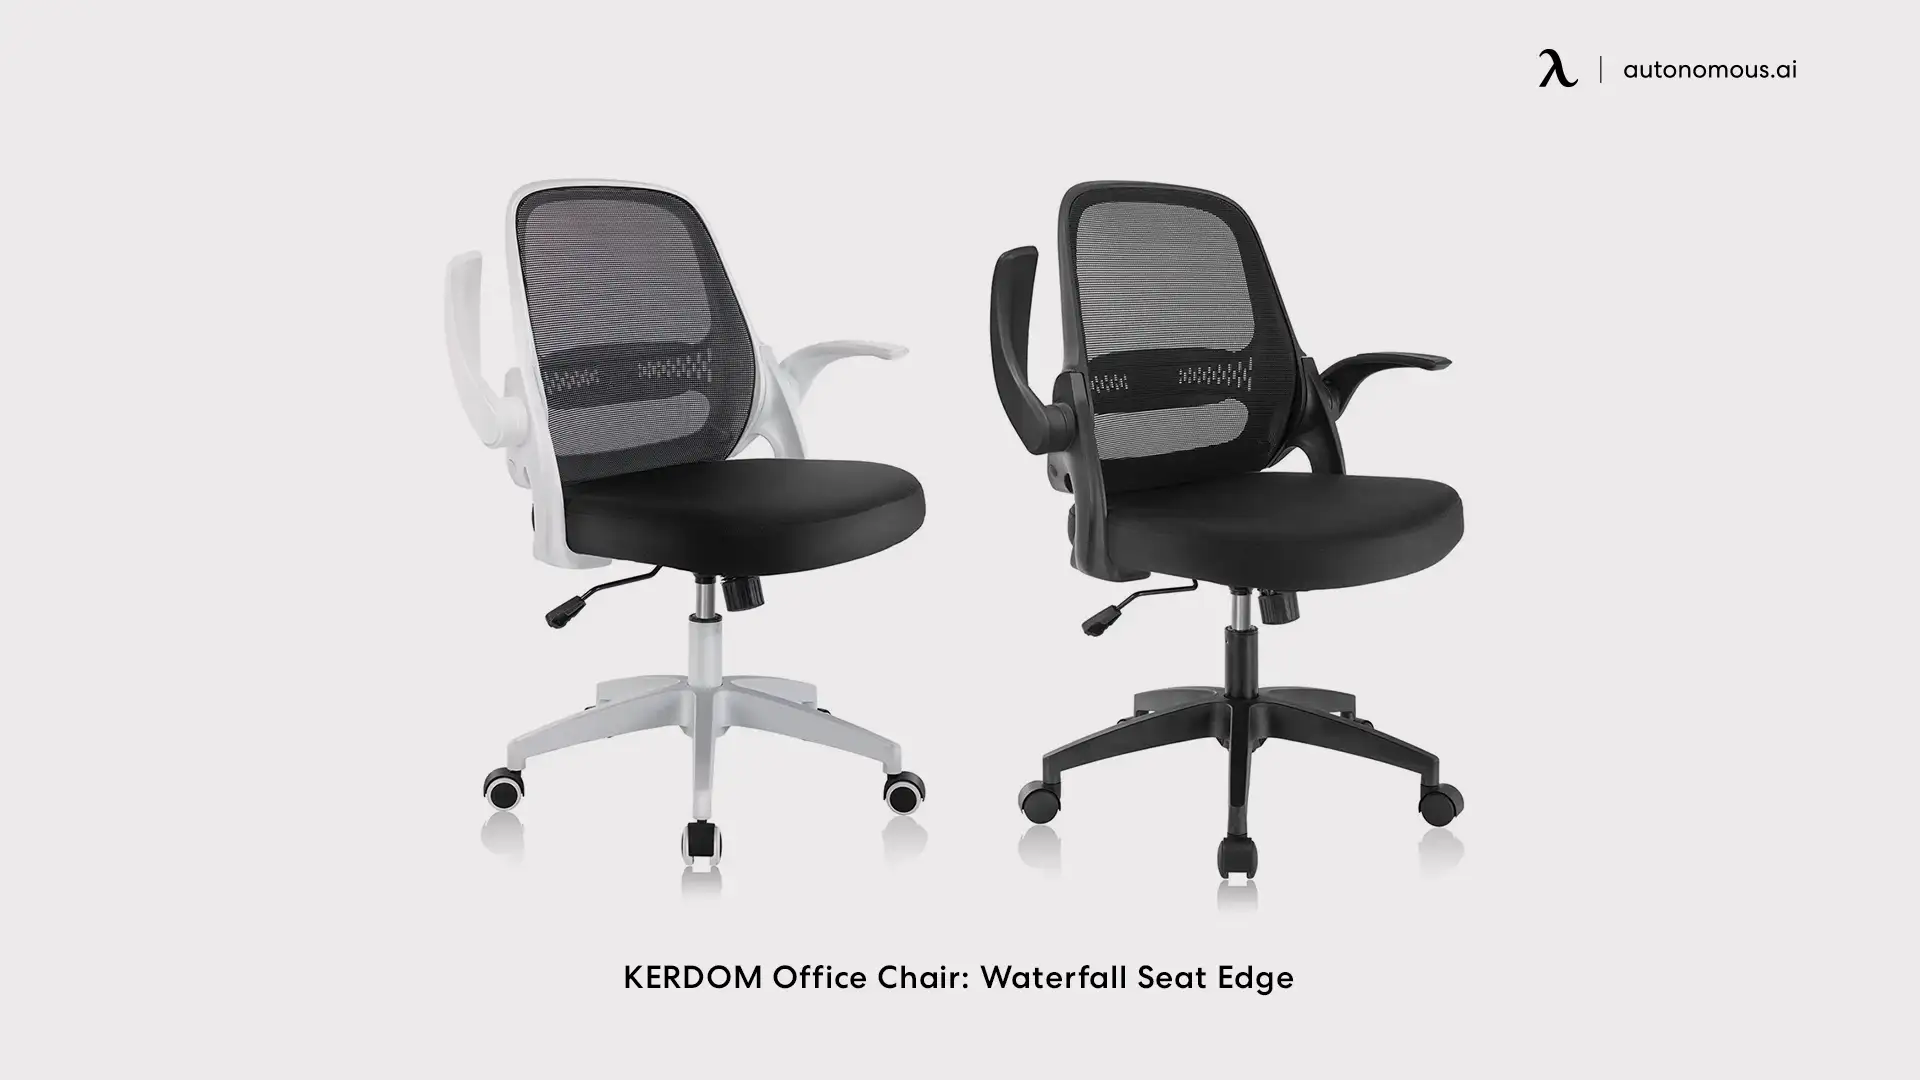 KERDOM Office Chair: Waterfall Seat Edge